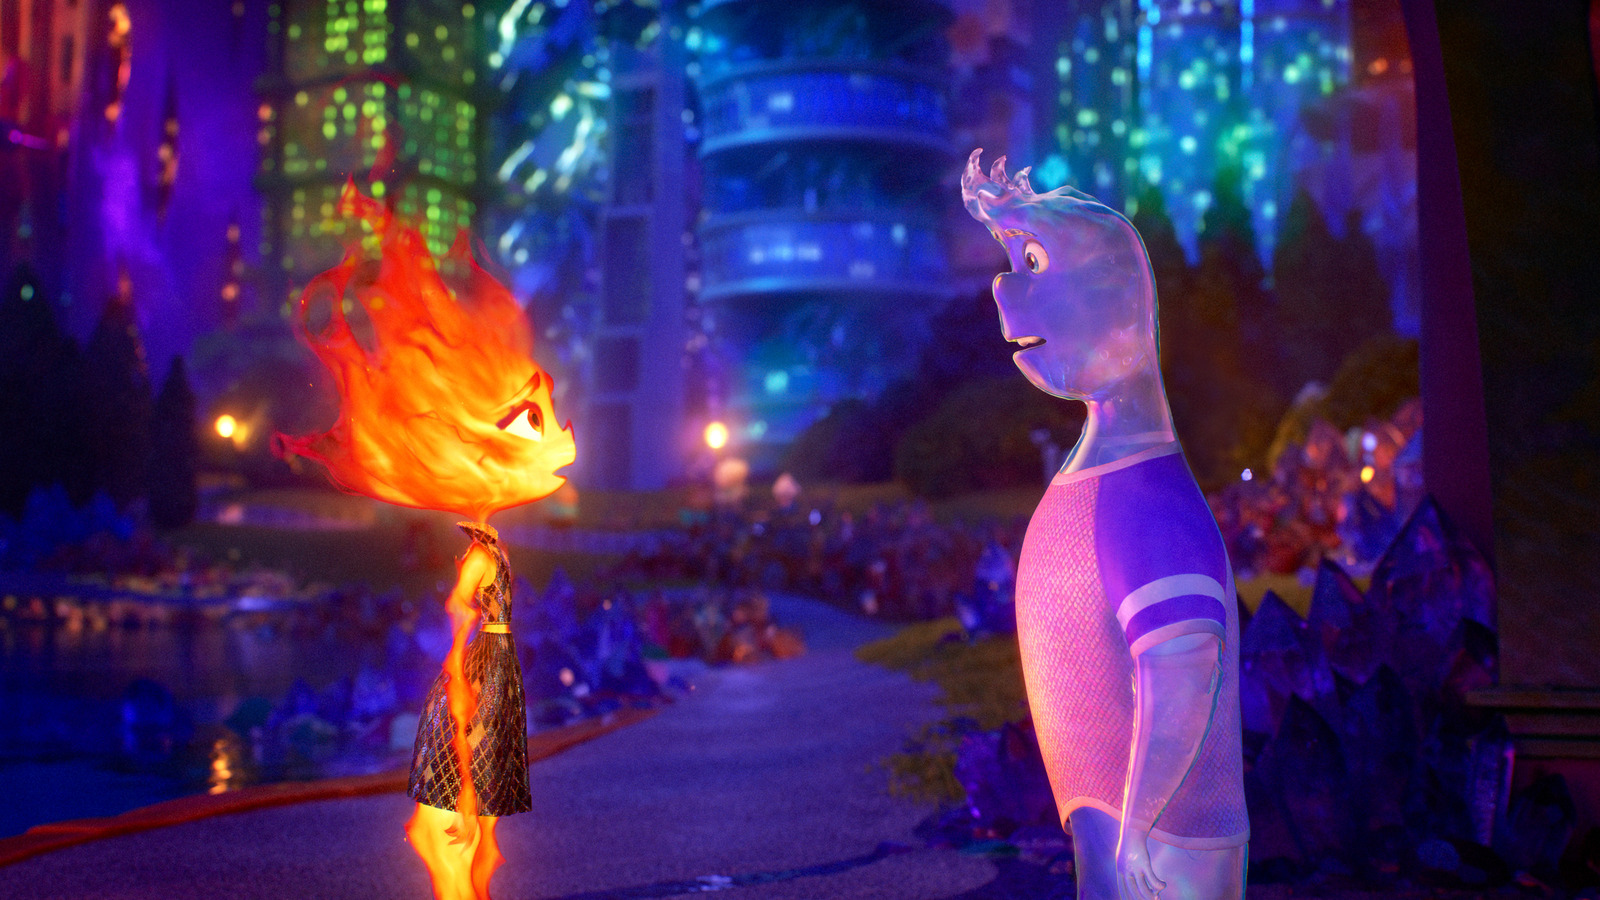 Elemental Trailer Opposites Attract In The Latest Pixar Film